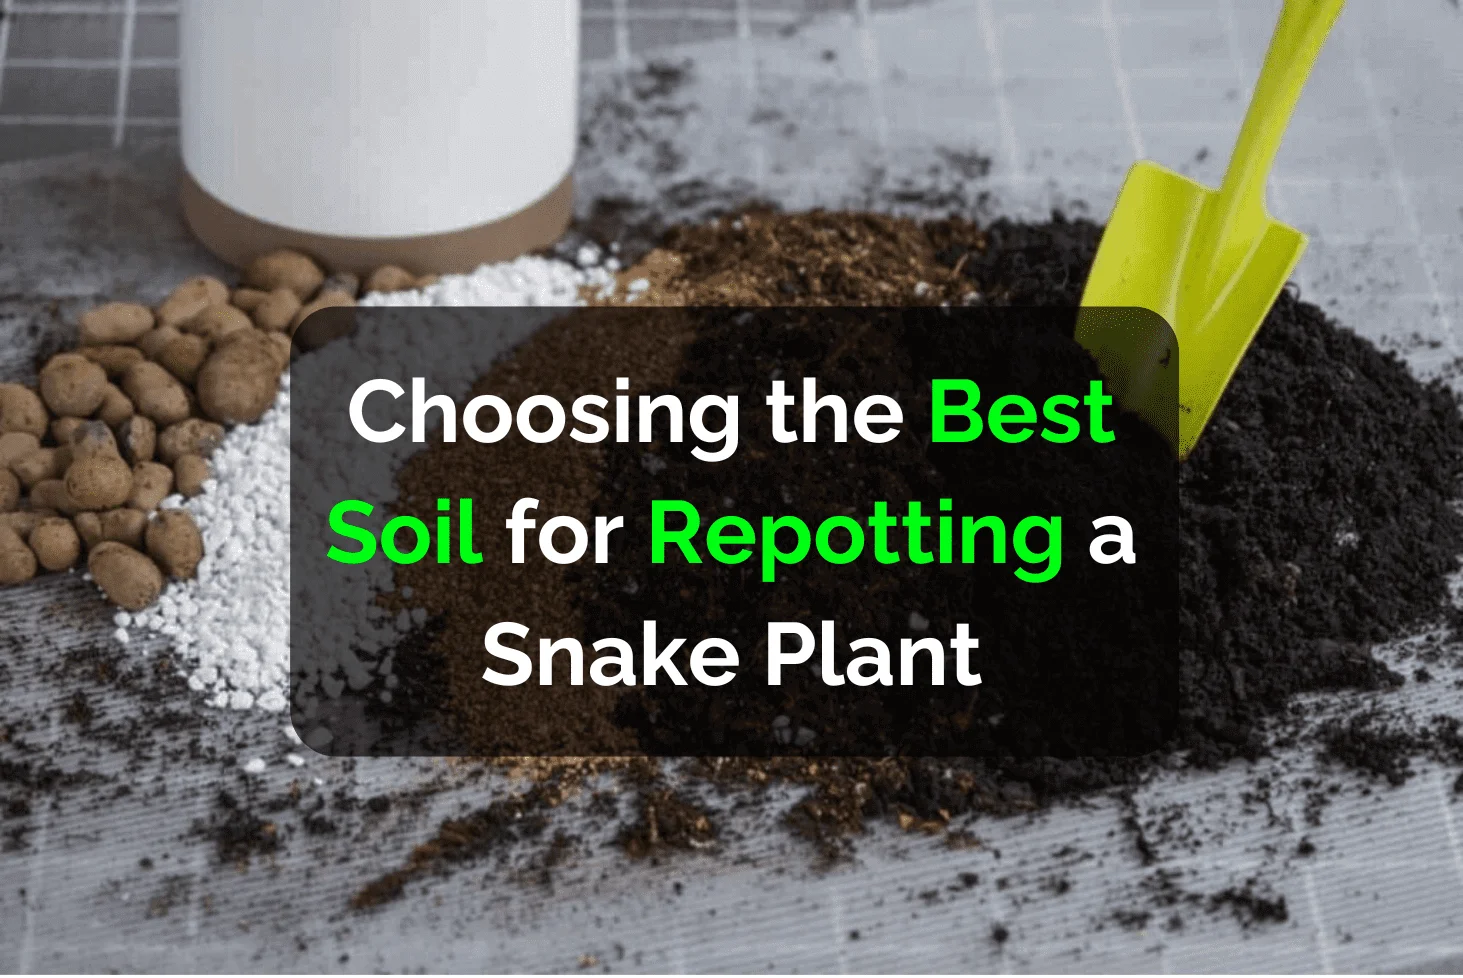 Choosing the Best Soil for Repotting a Snake Plant